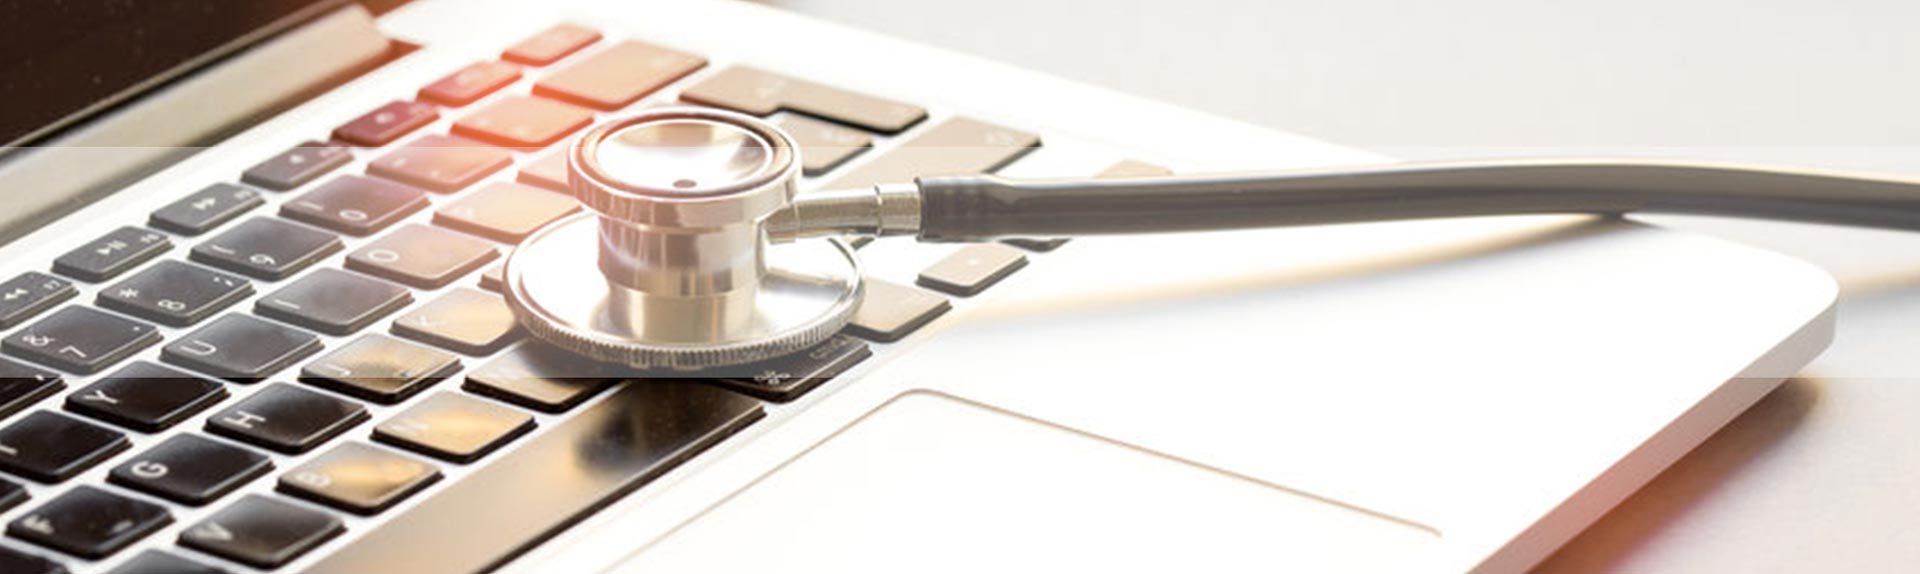 medicus it staff augmentation stethoscope on laptop